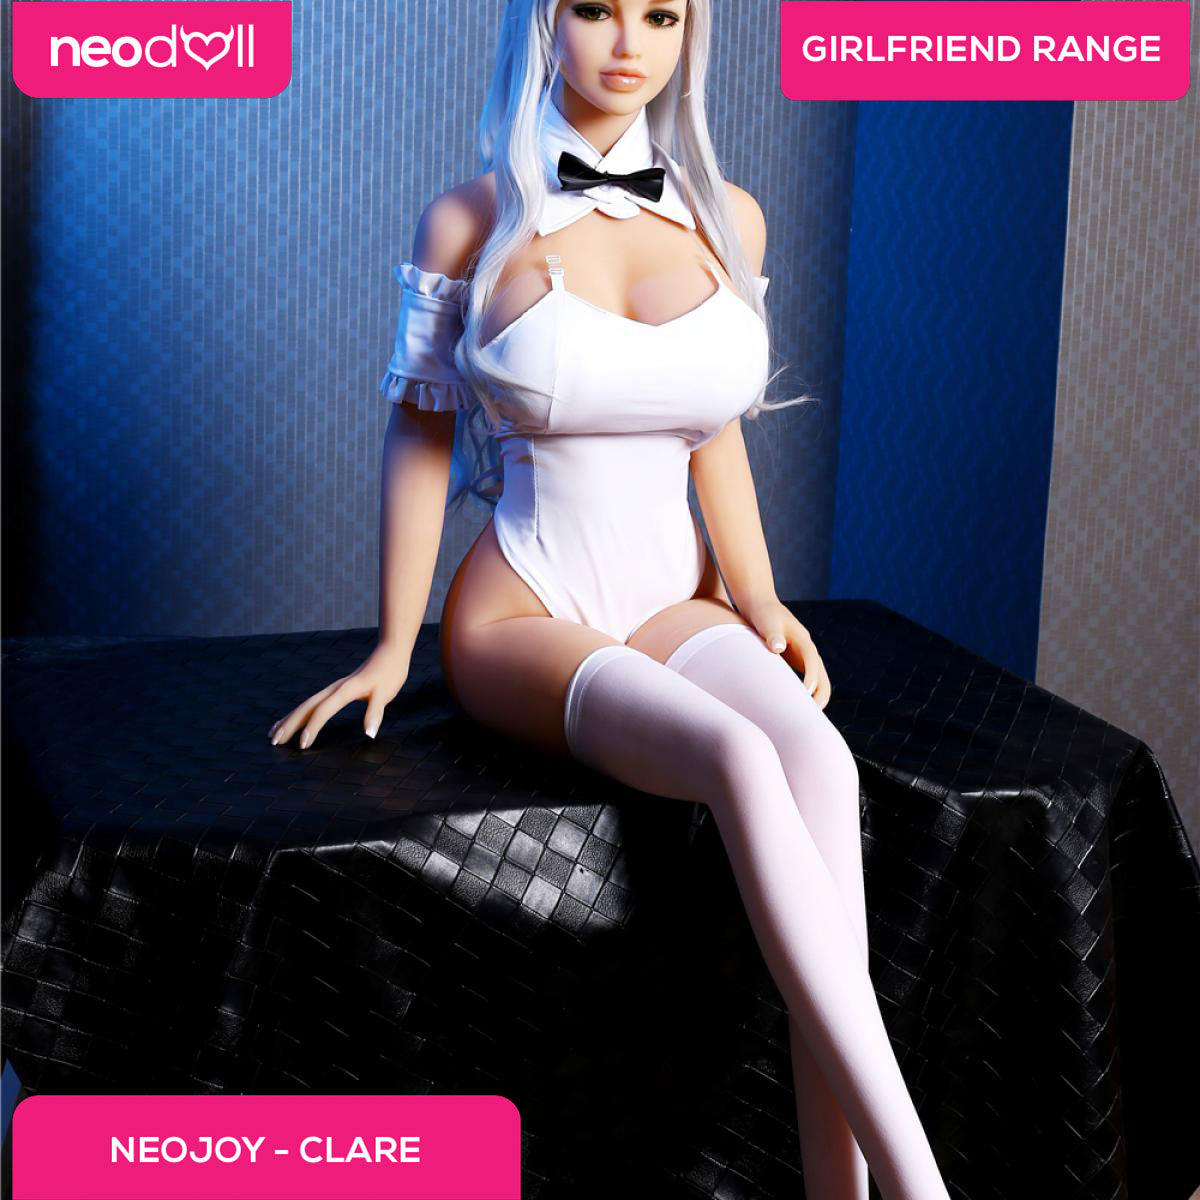 Sex Doll Clare | 148cm Height | Tan Skin | Standing | Neodoll Girlfriend